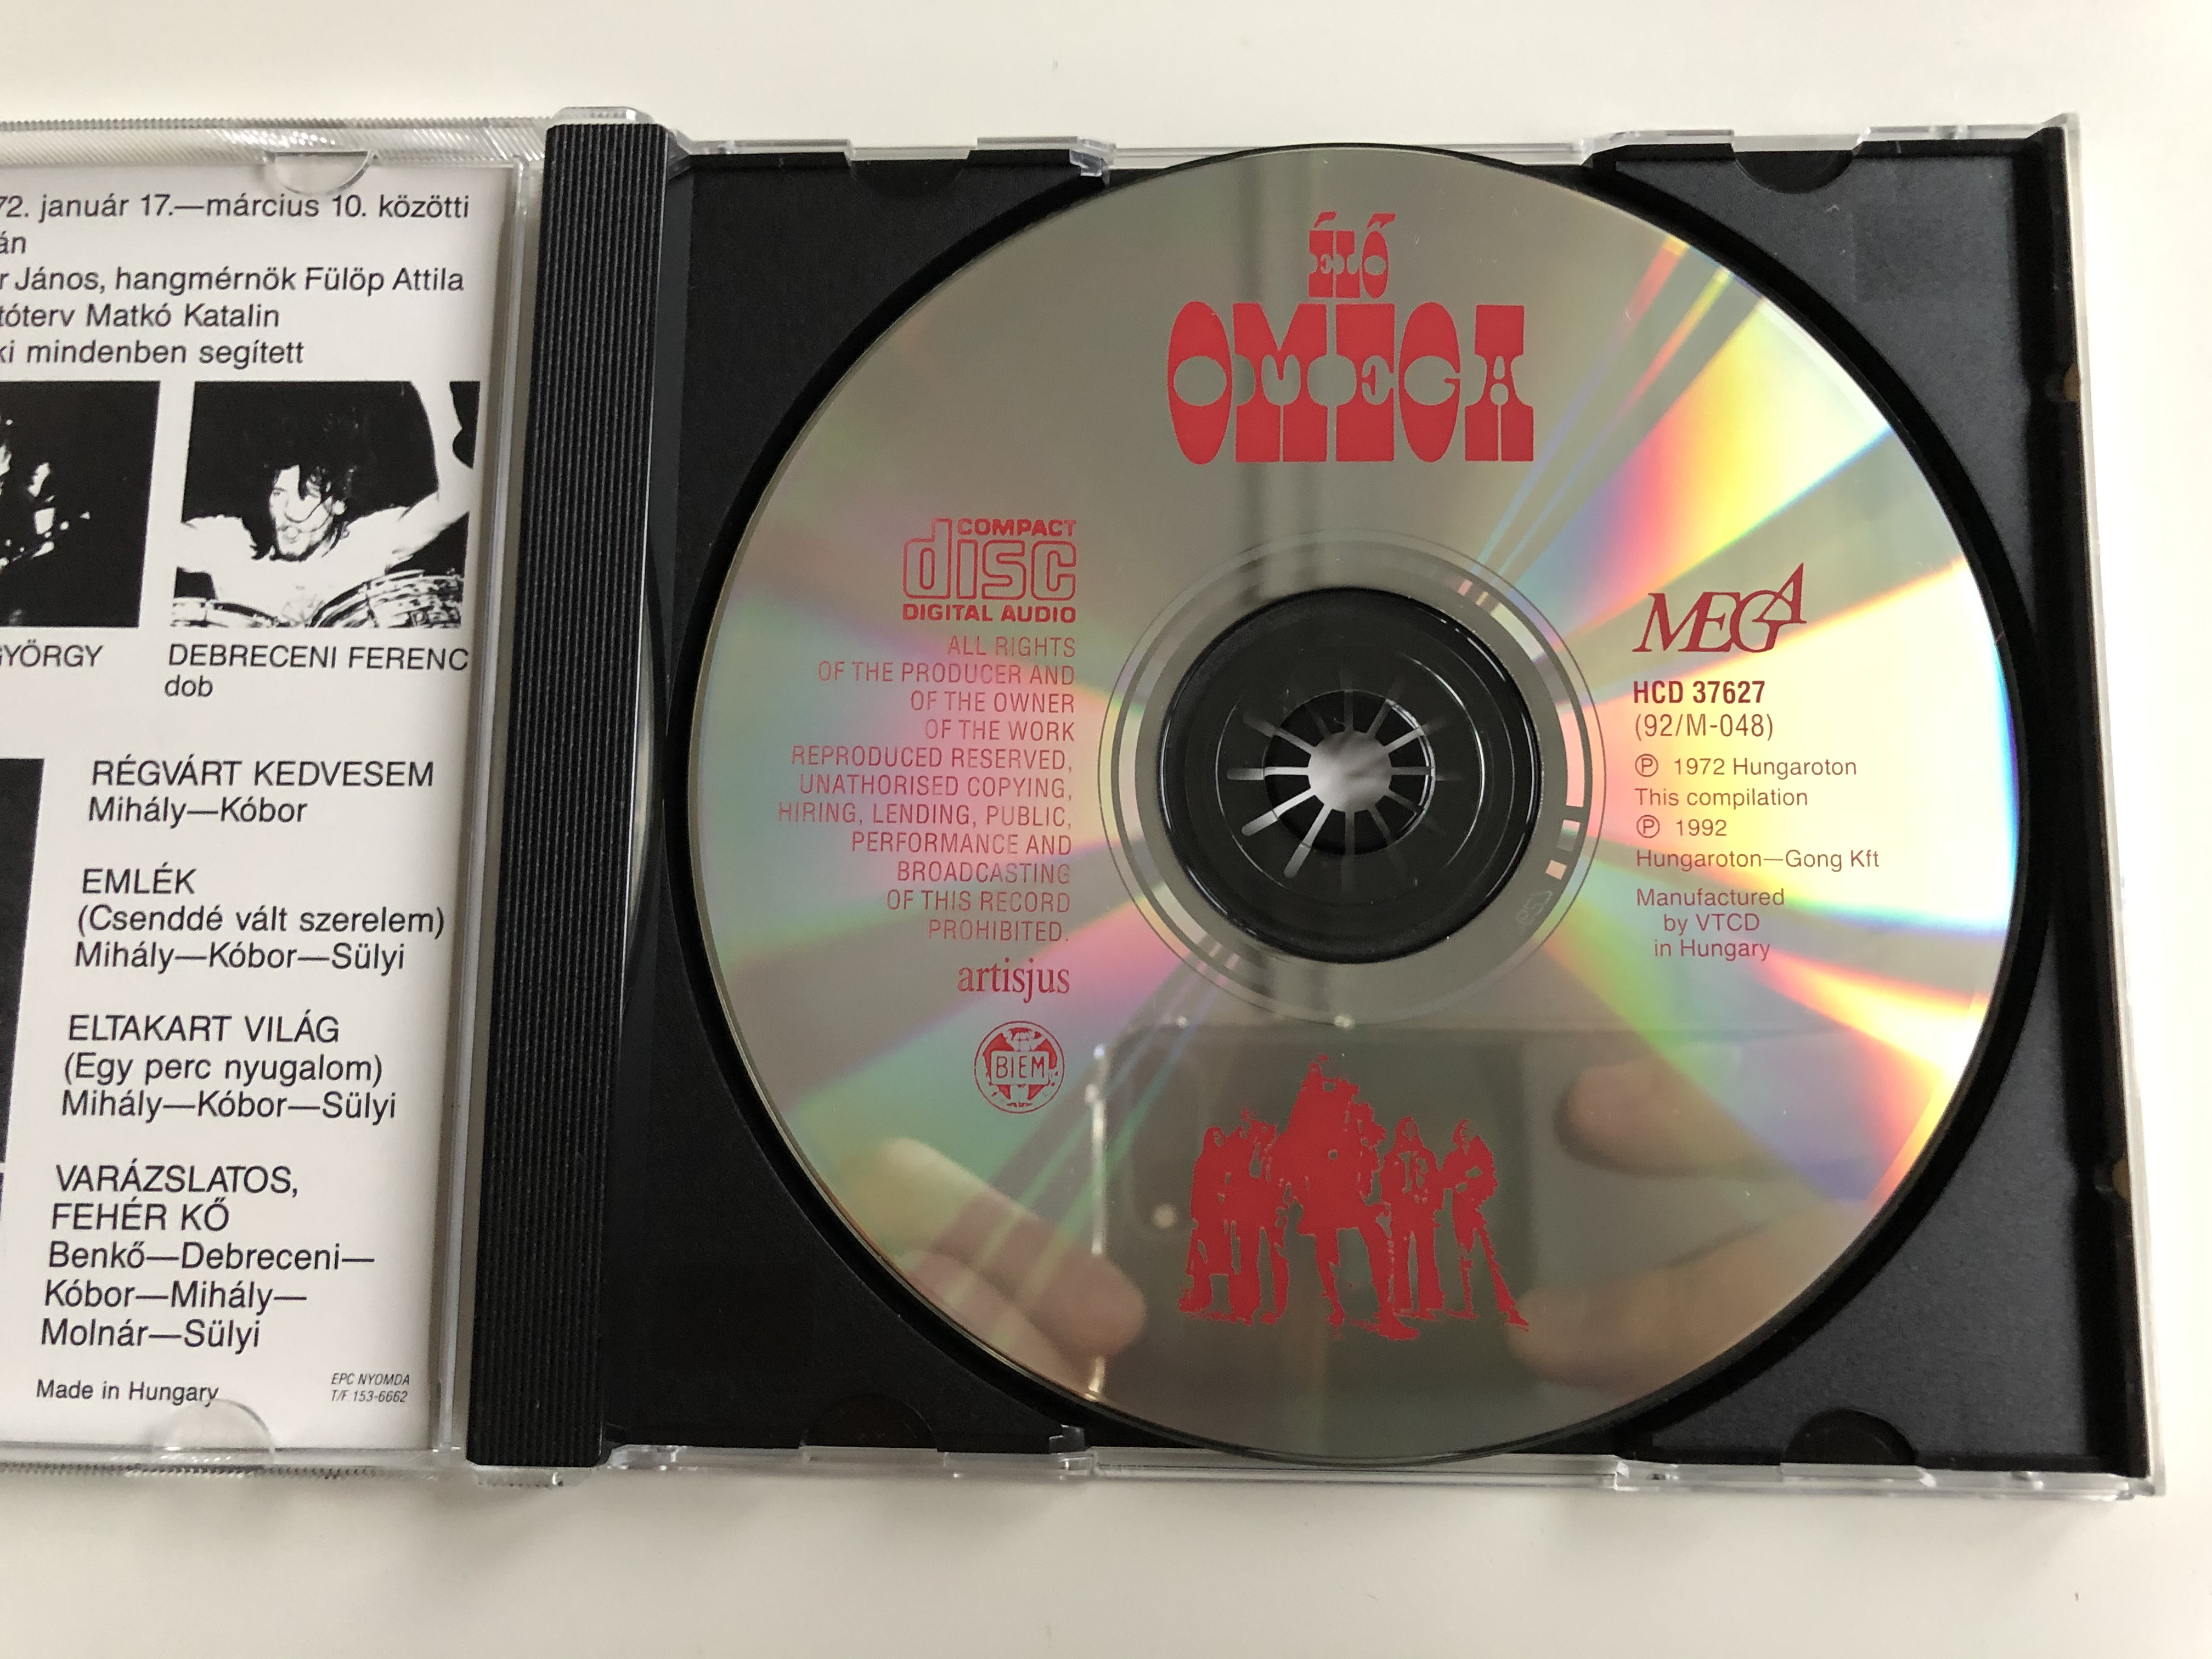 l-omega-hungaroton-audio-cd-1992-hcd-37627-3-.jpg